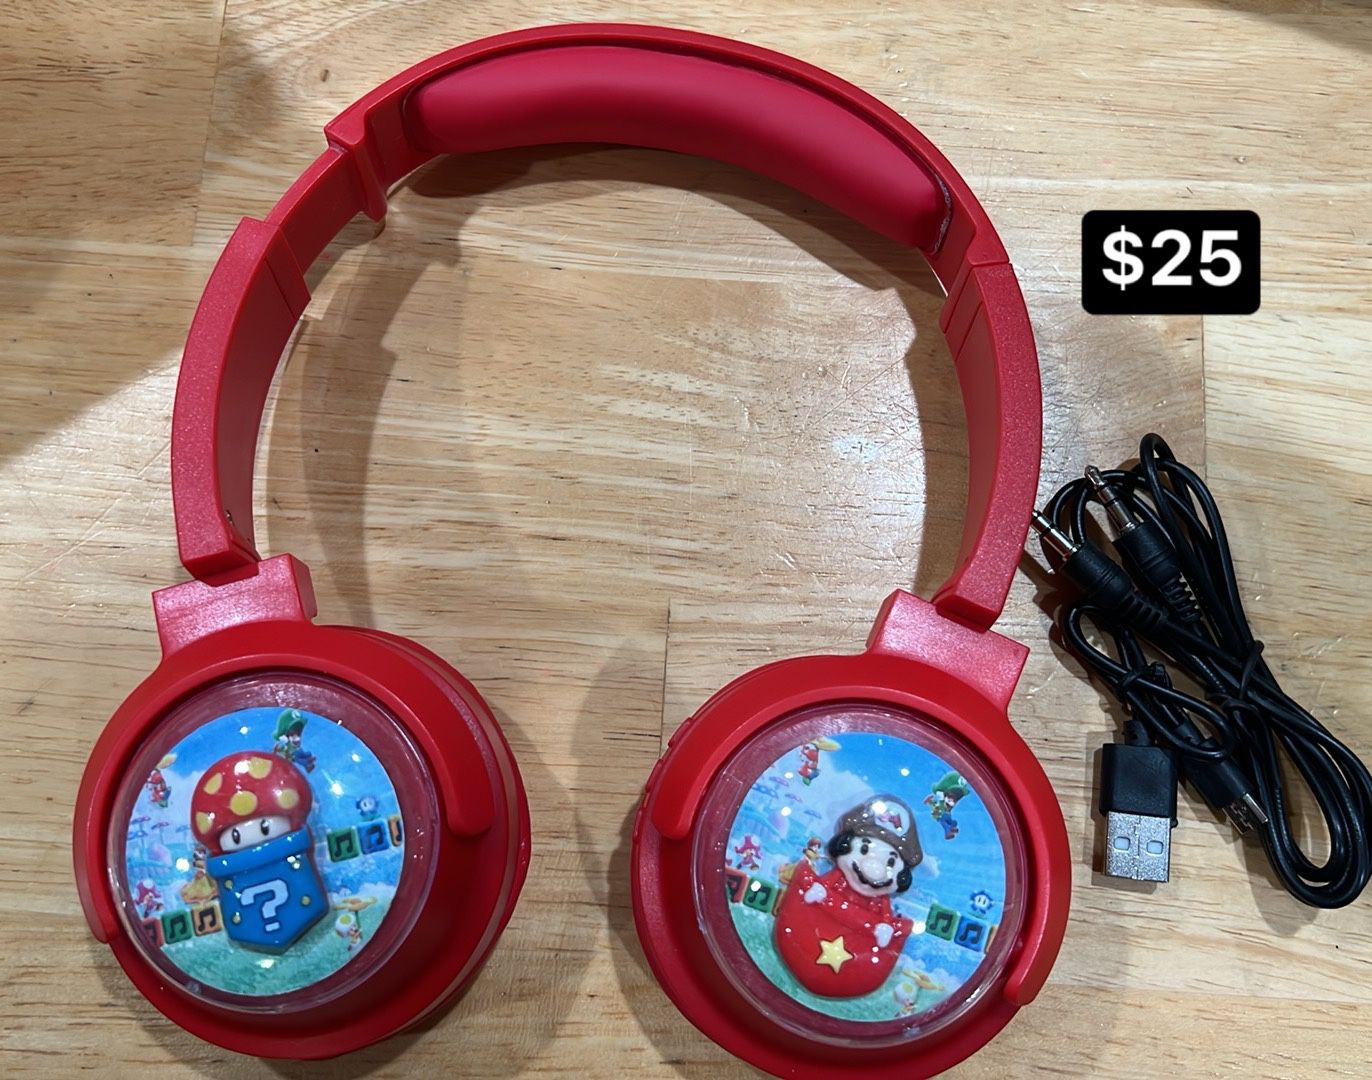 Mario light Up Headphones 